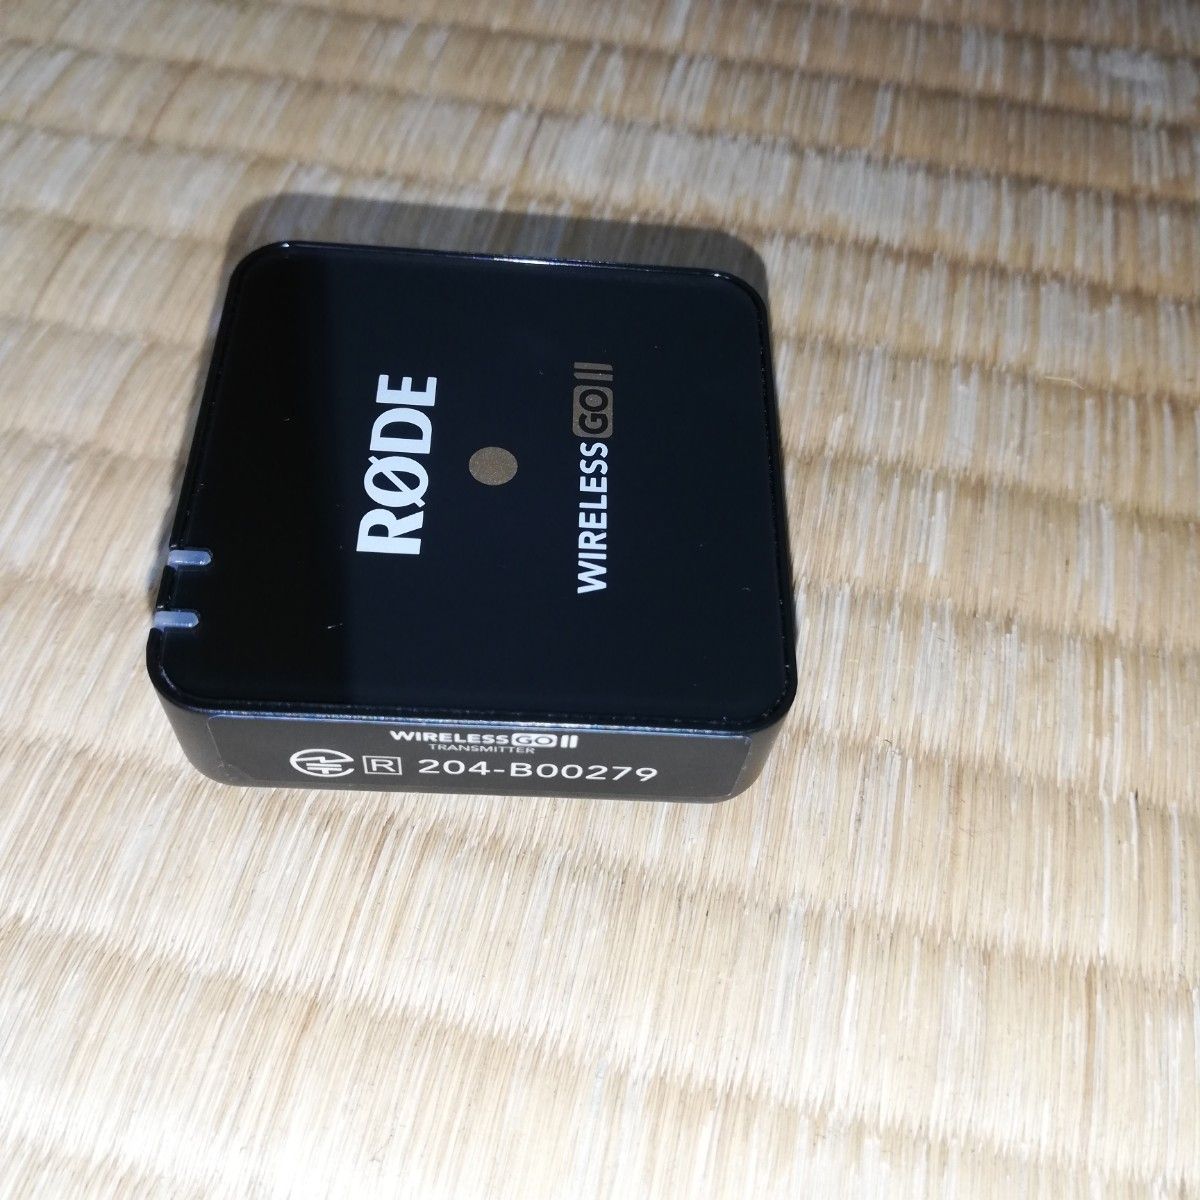 RODE Wireless GO II ロード　ワイヤレスマイク